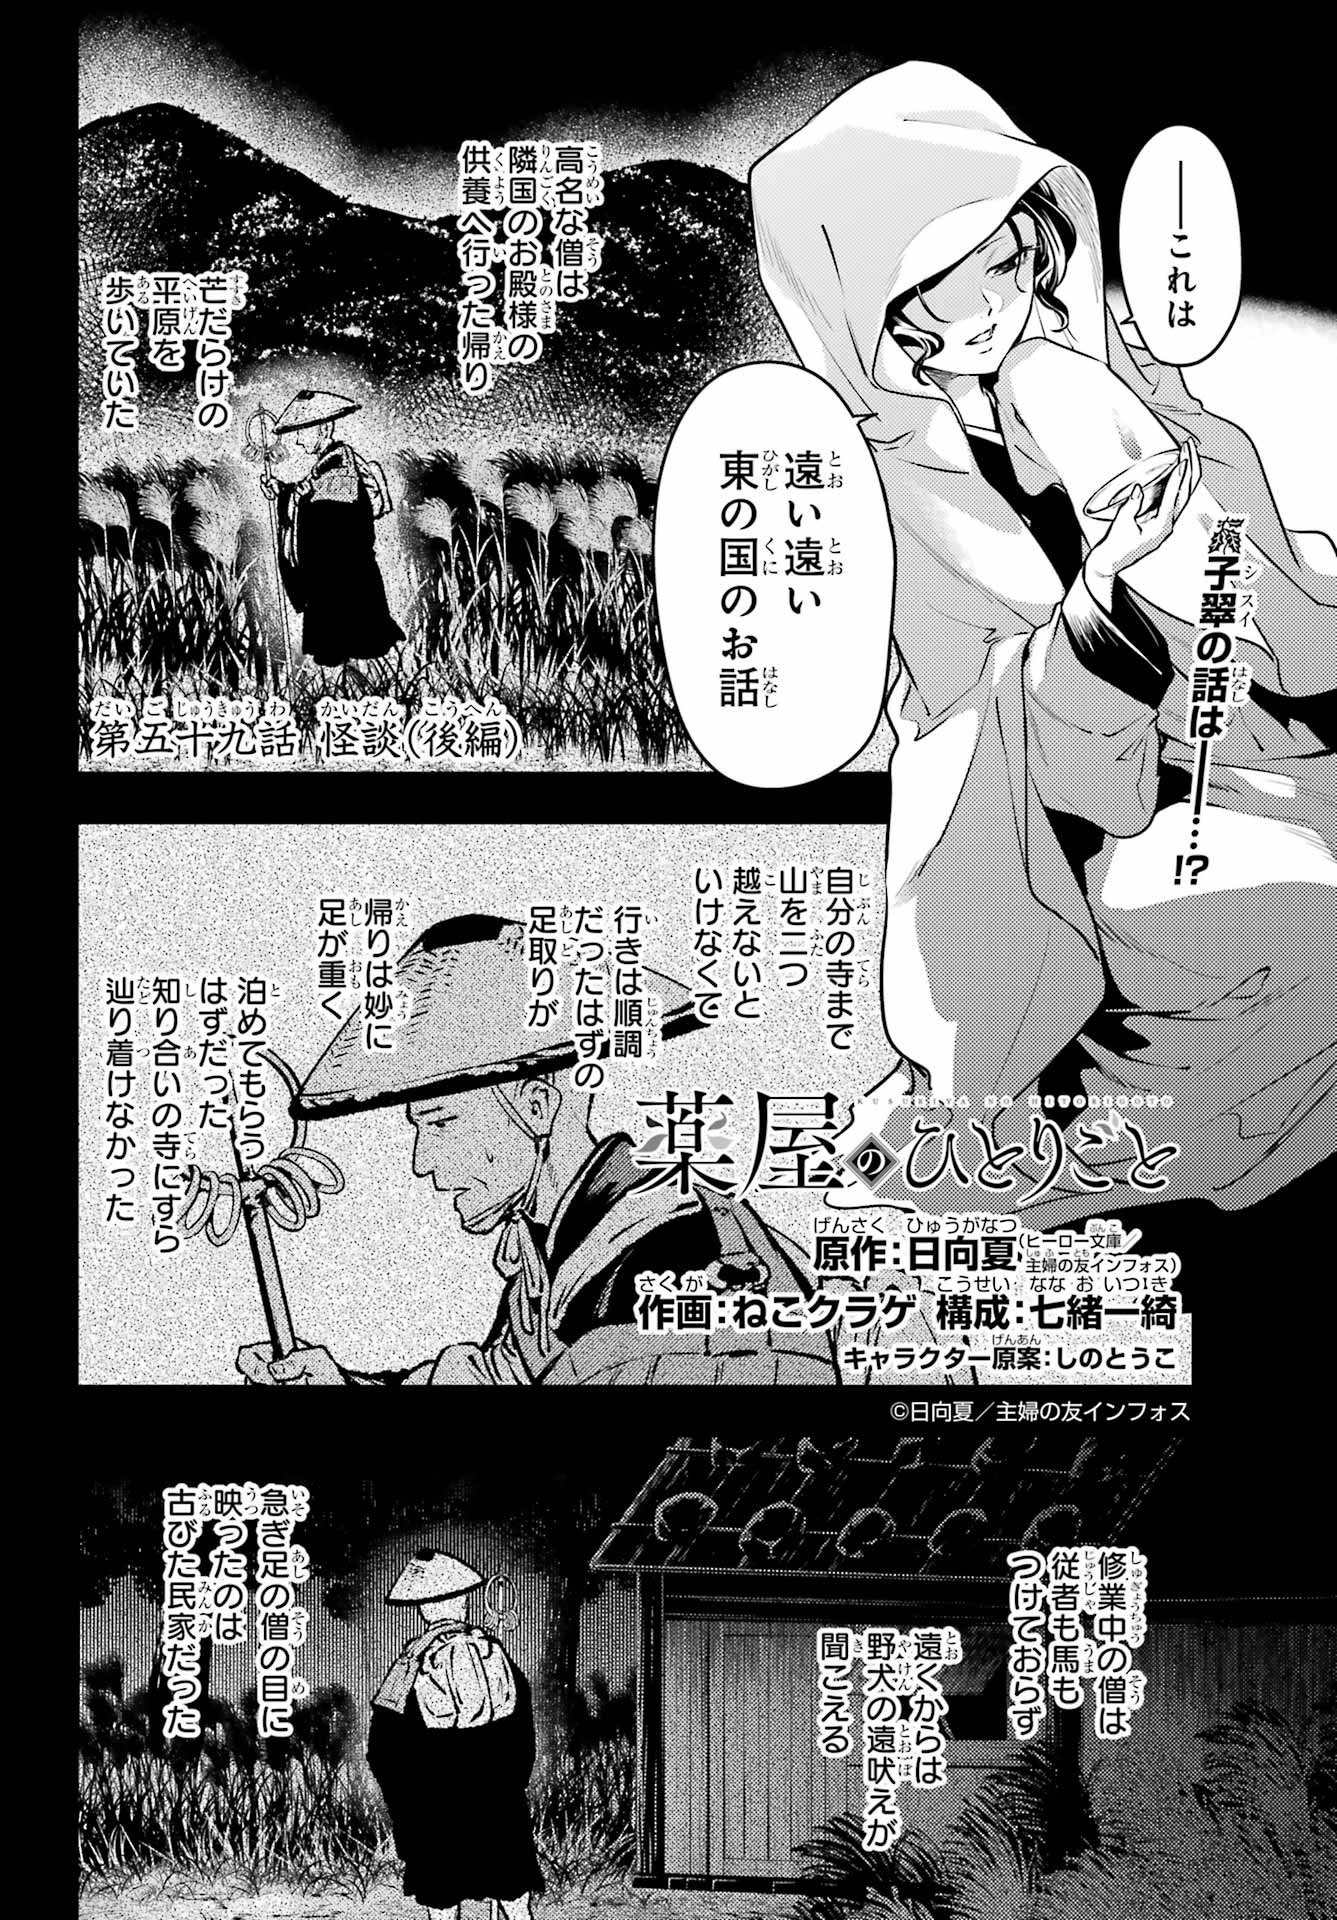 Kusuriya no Hitorigoto - Chapter 59.2 - Page 1